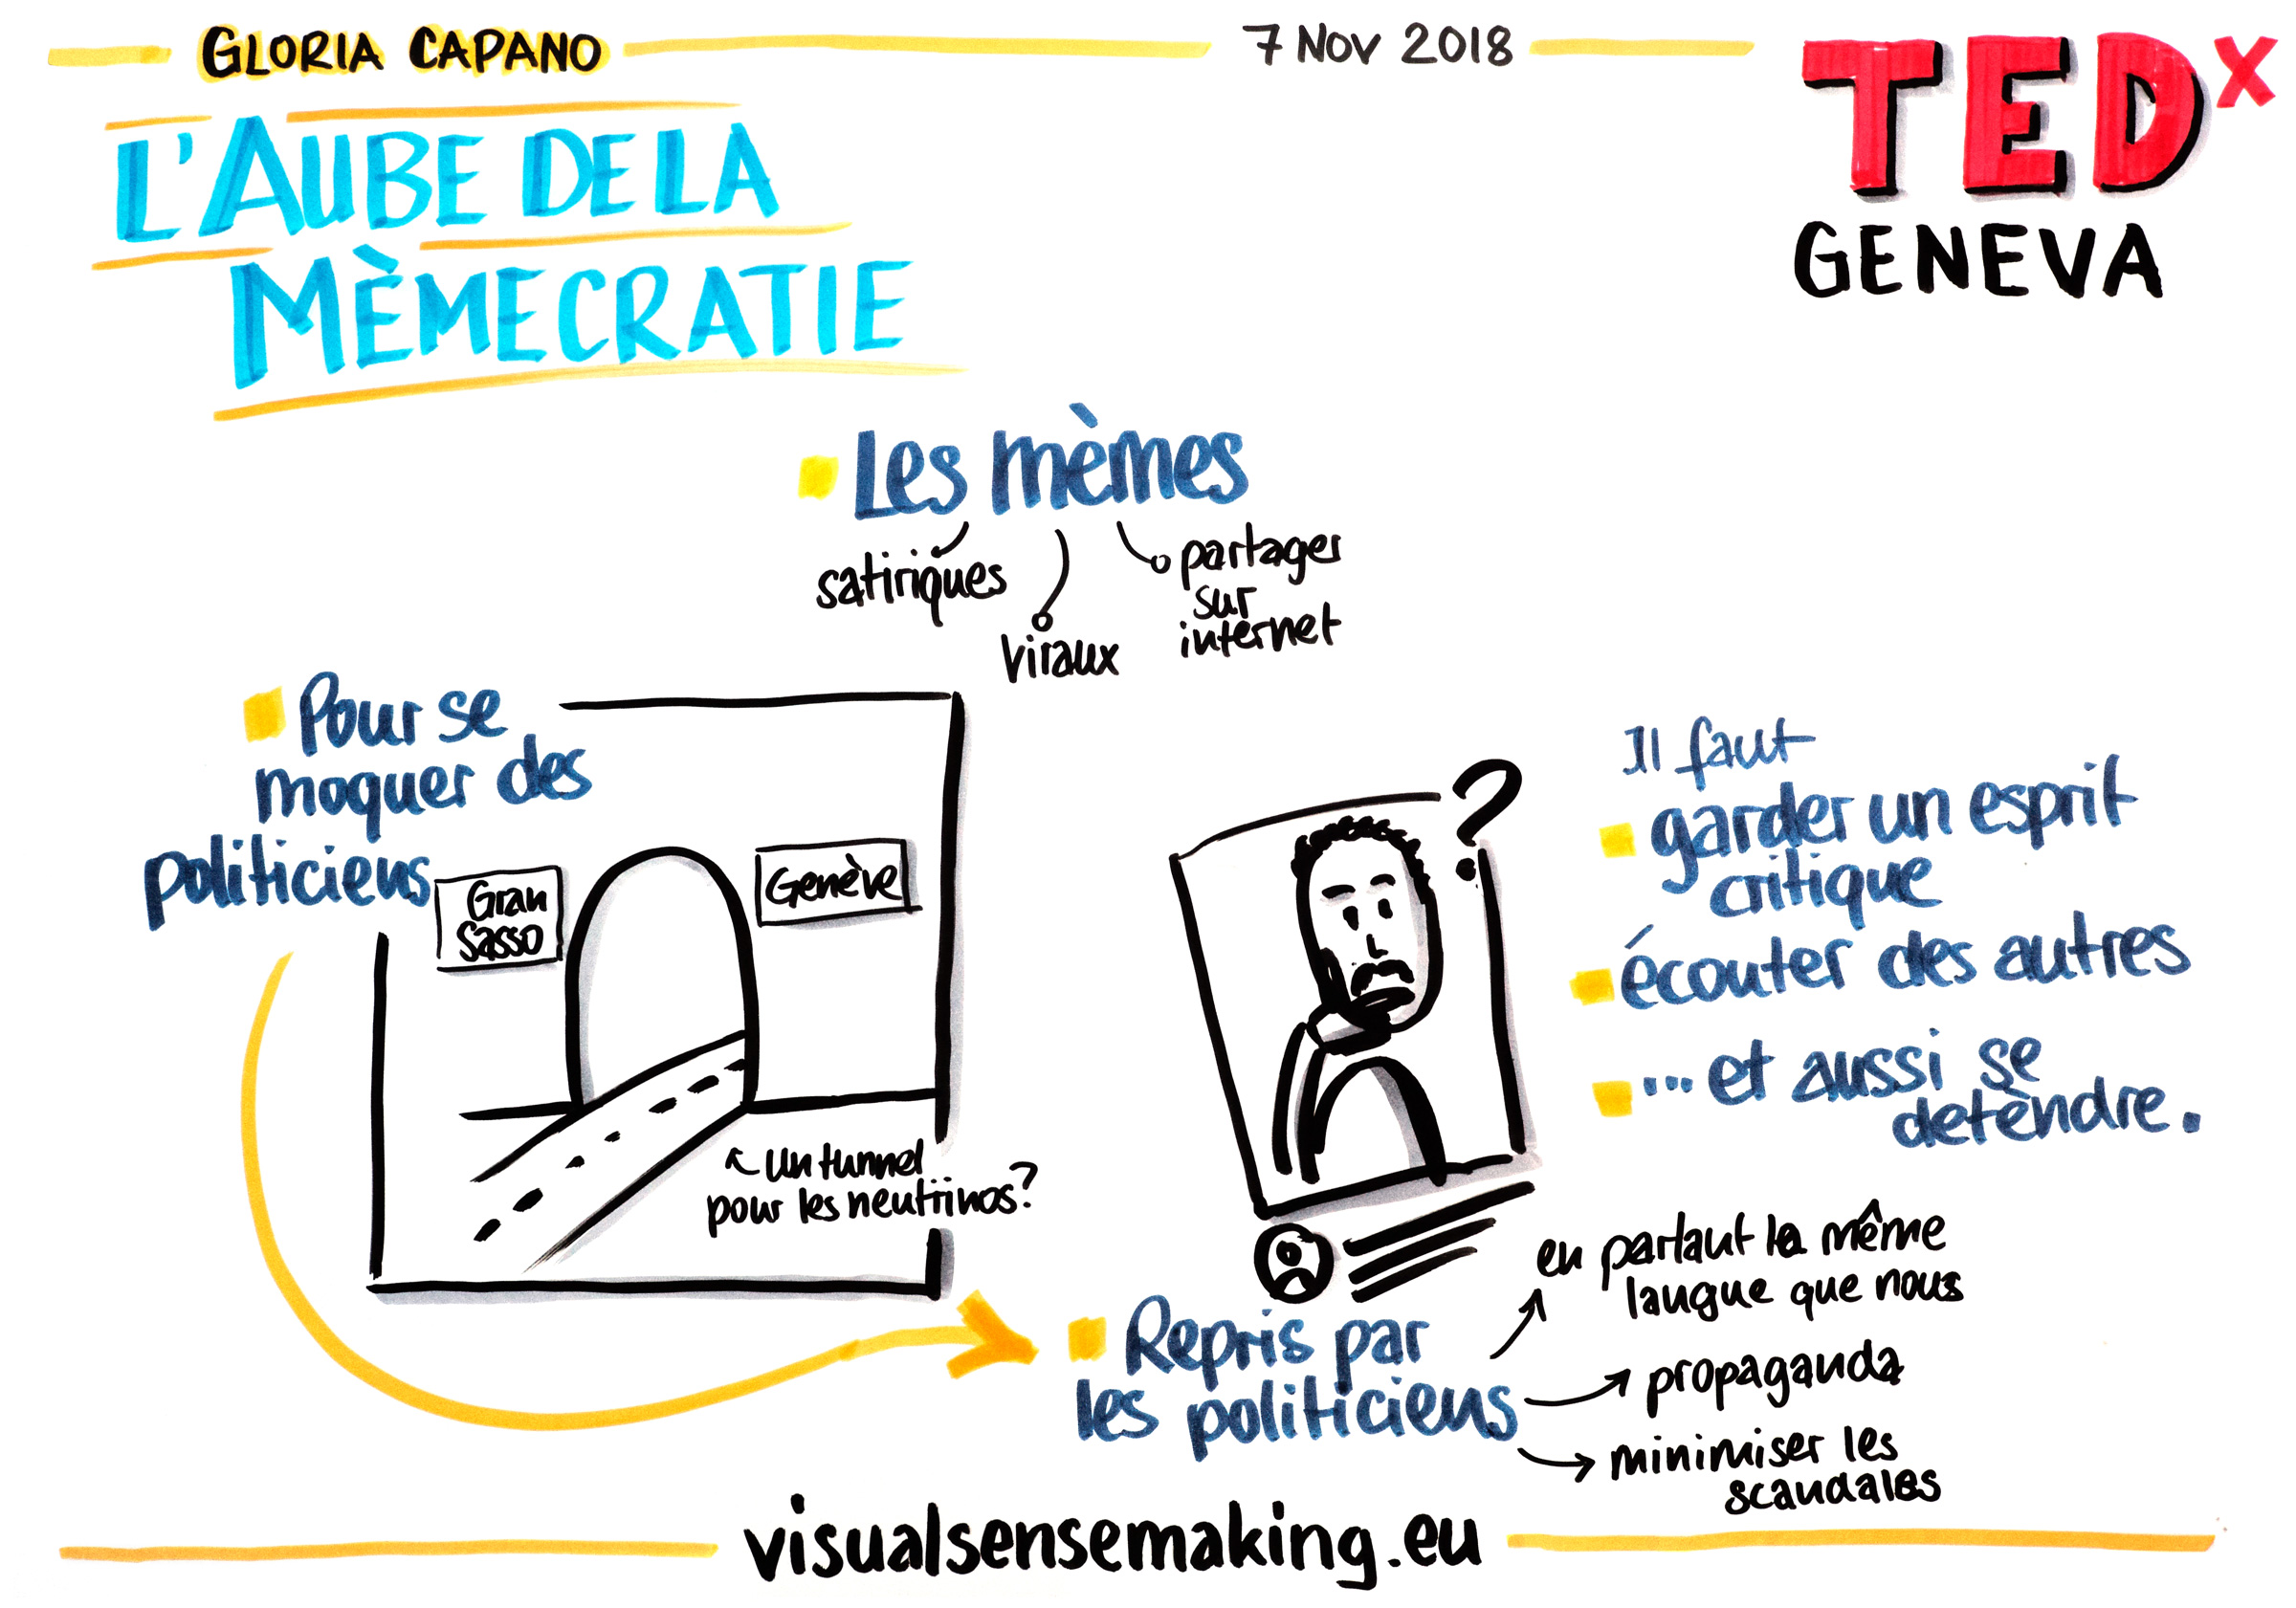 Visual summary of the talk 'L'aube de la mèmecratie'